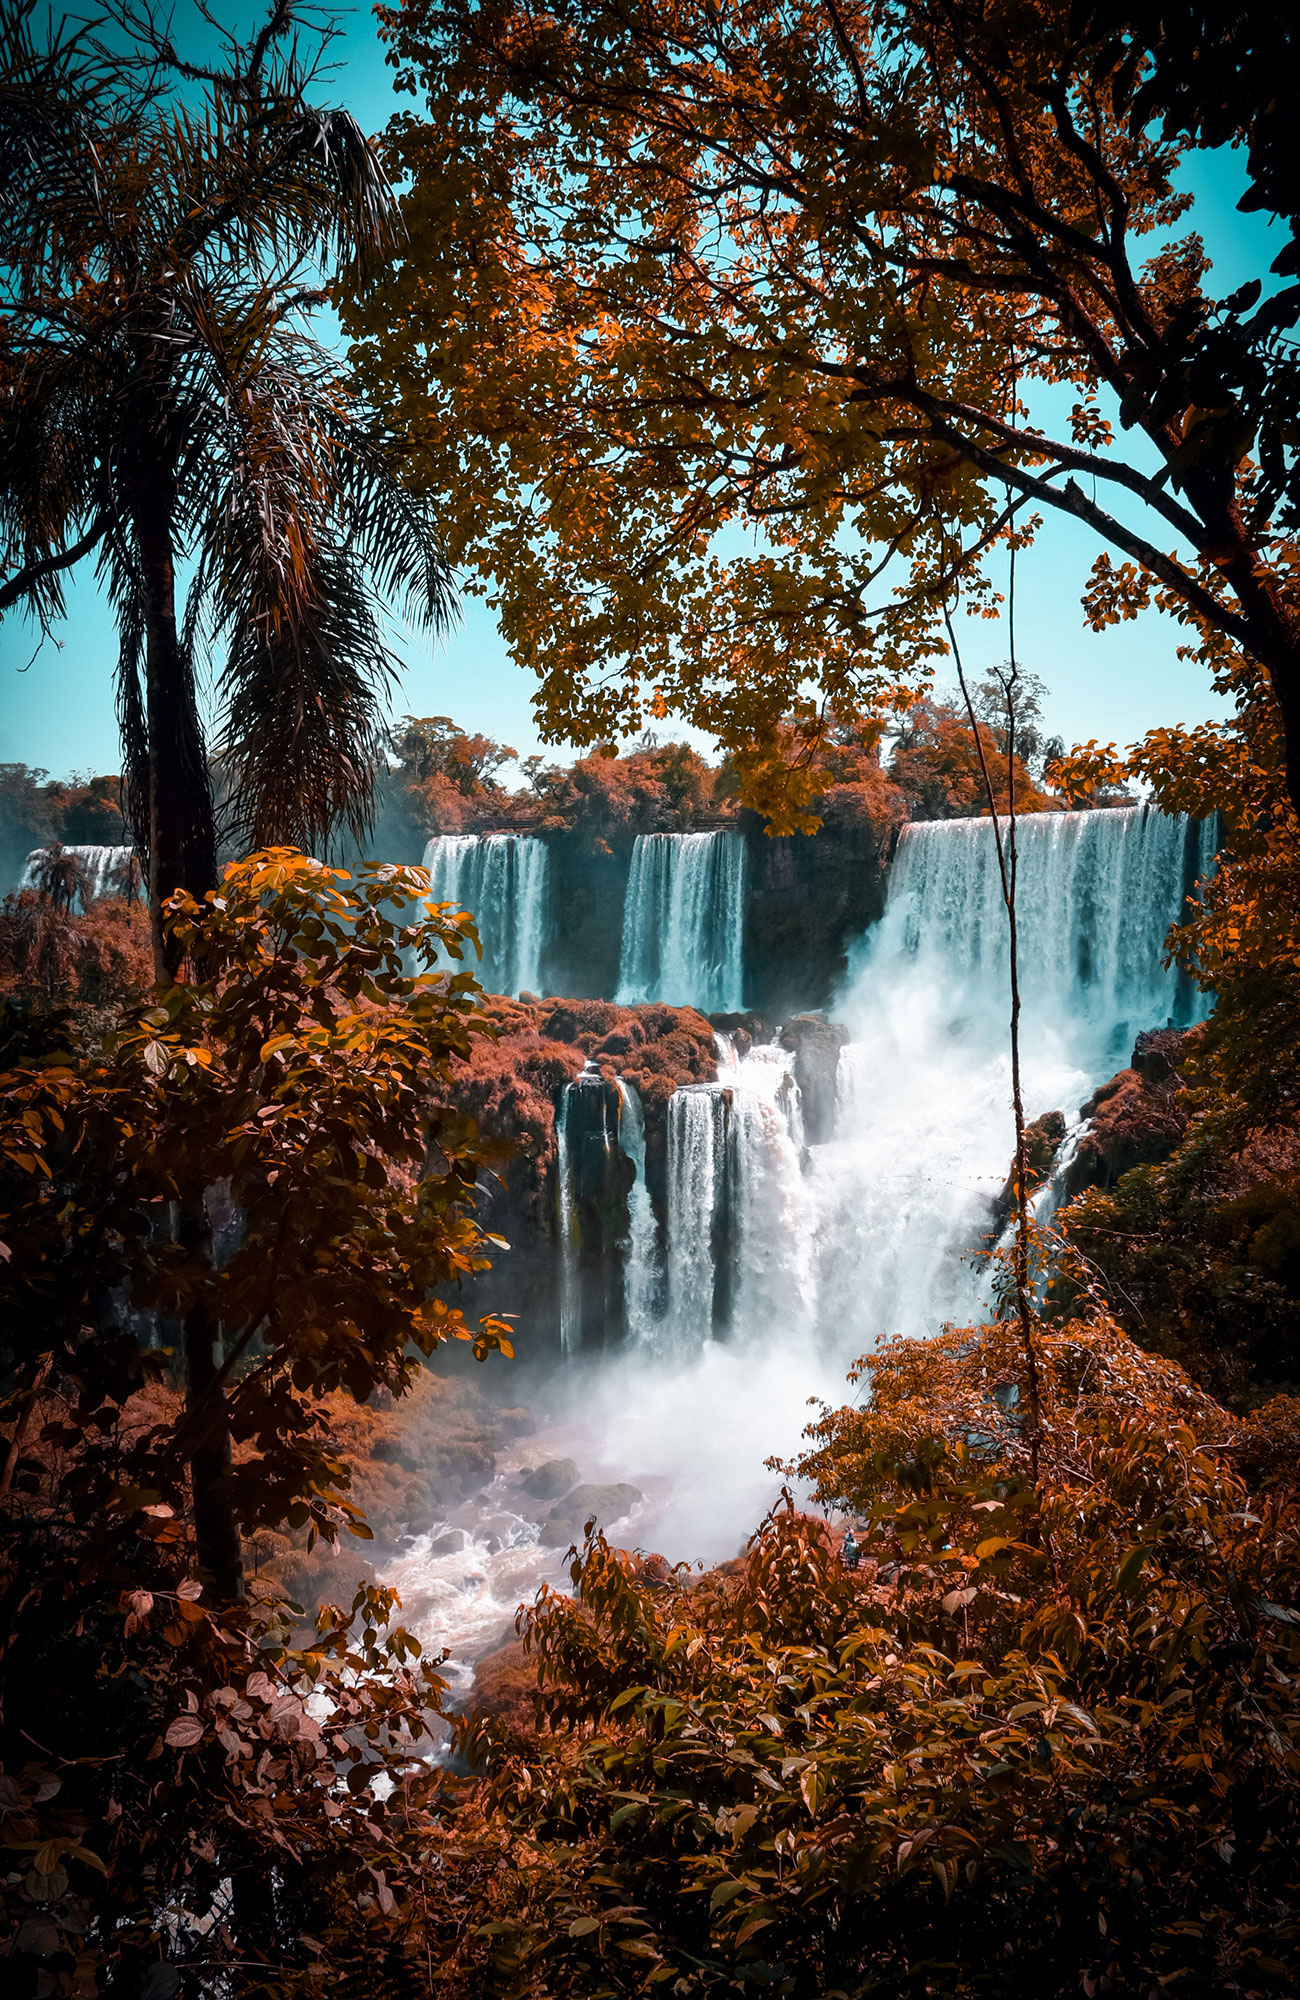 Iguaza Falls in Argentinië en Brazilië | Reizen met KILROY